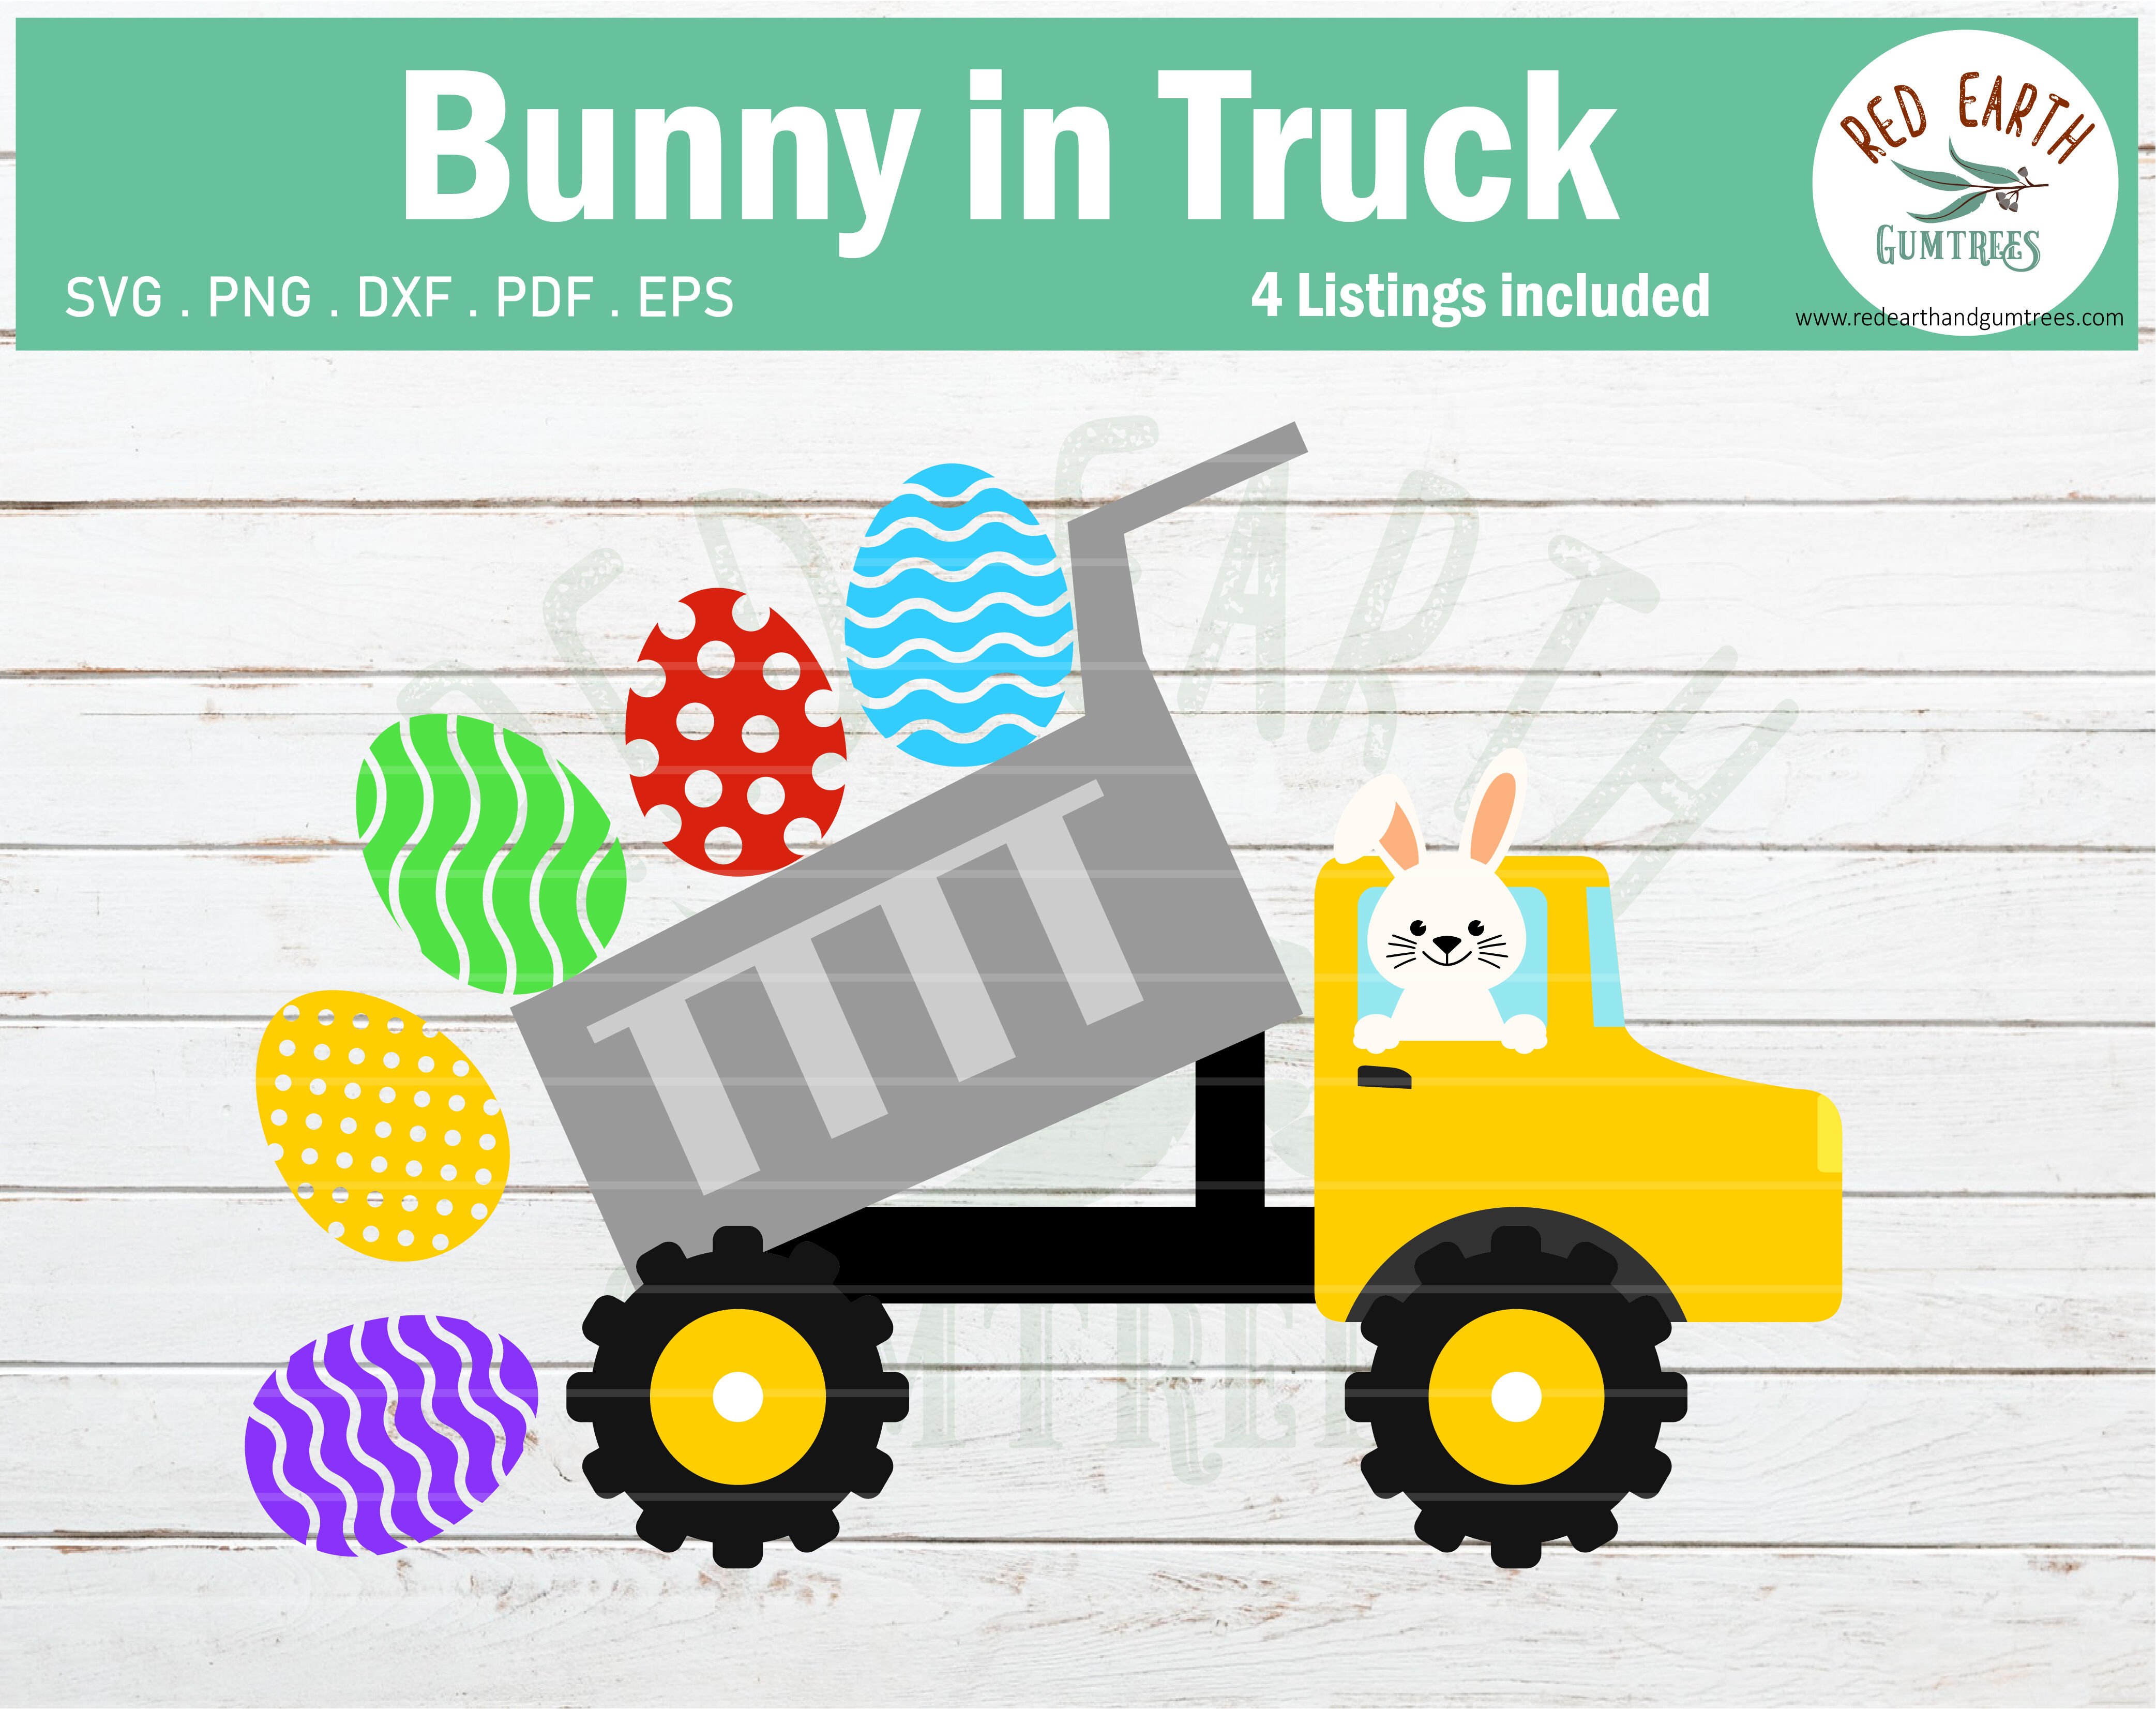 Happy Easter Truck SVG, Easter Bunny Truck SVG